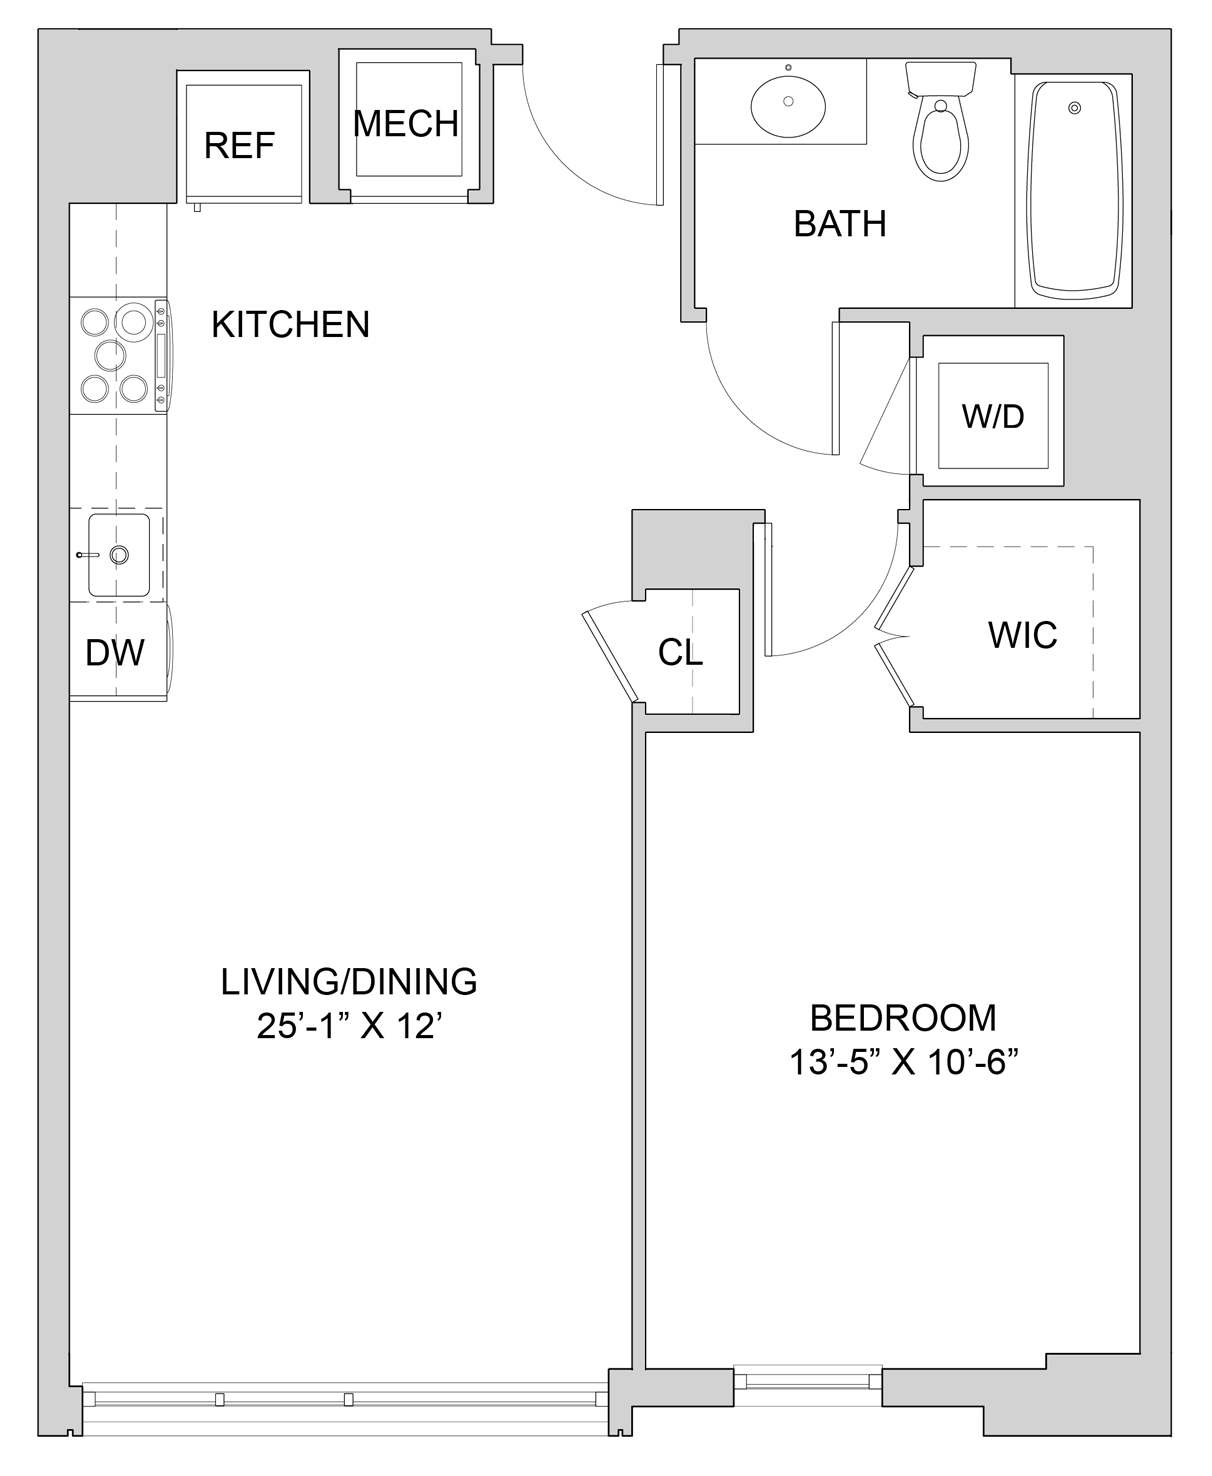 enlarged Floorplan W313 Image